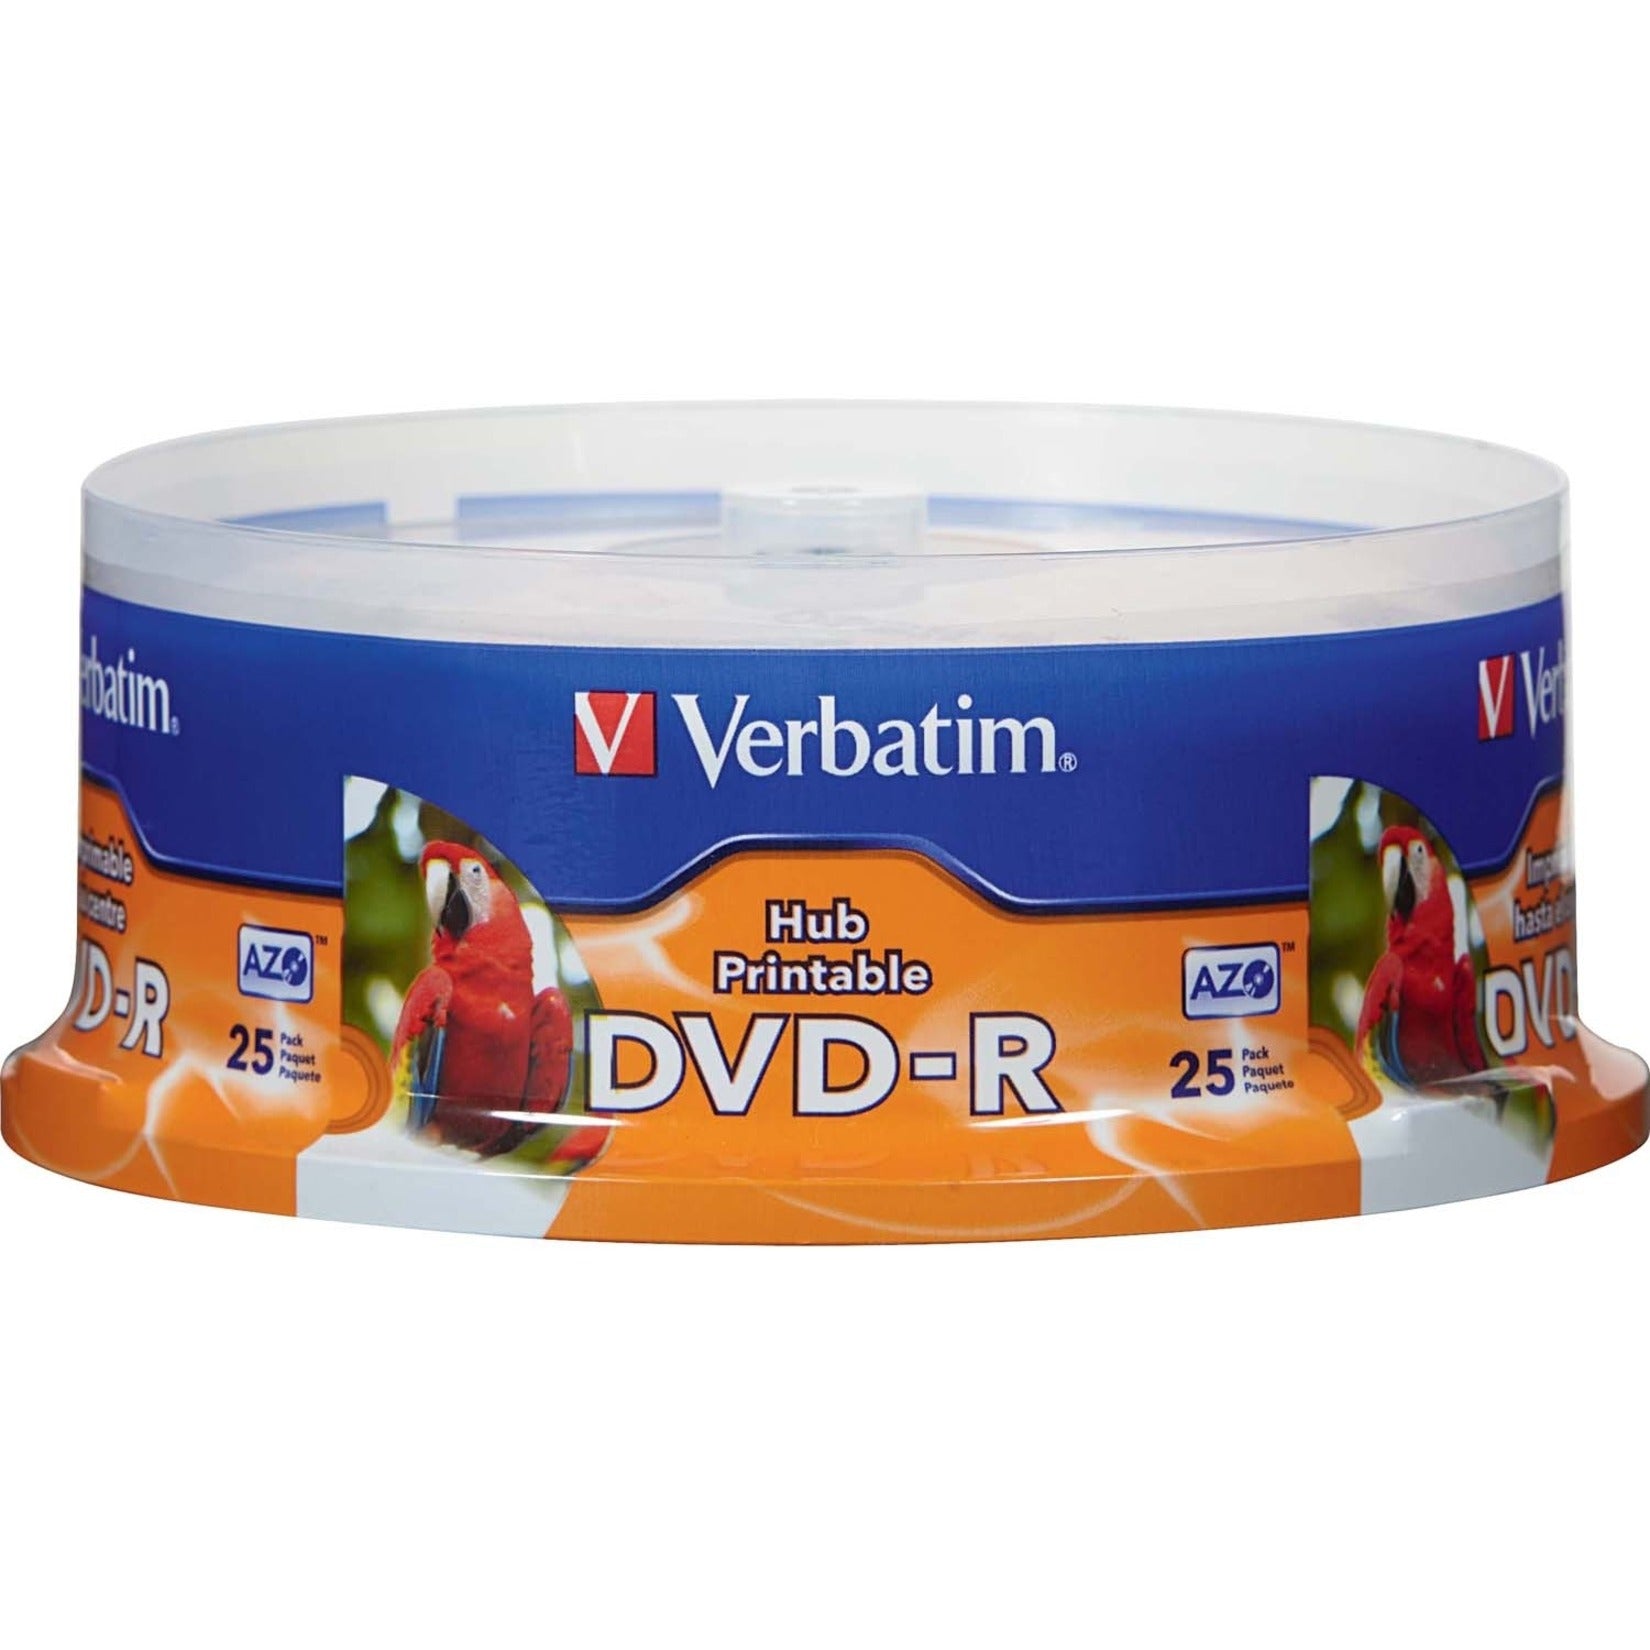 Verbatim 96191 DVD-R 4.7GB 16X White Inkjet Printable, Hub Printable, 25/PK Spindle